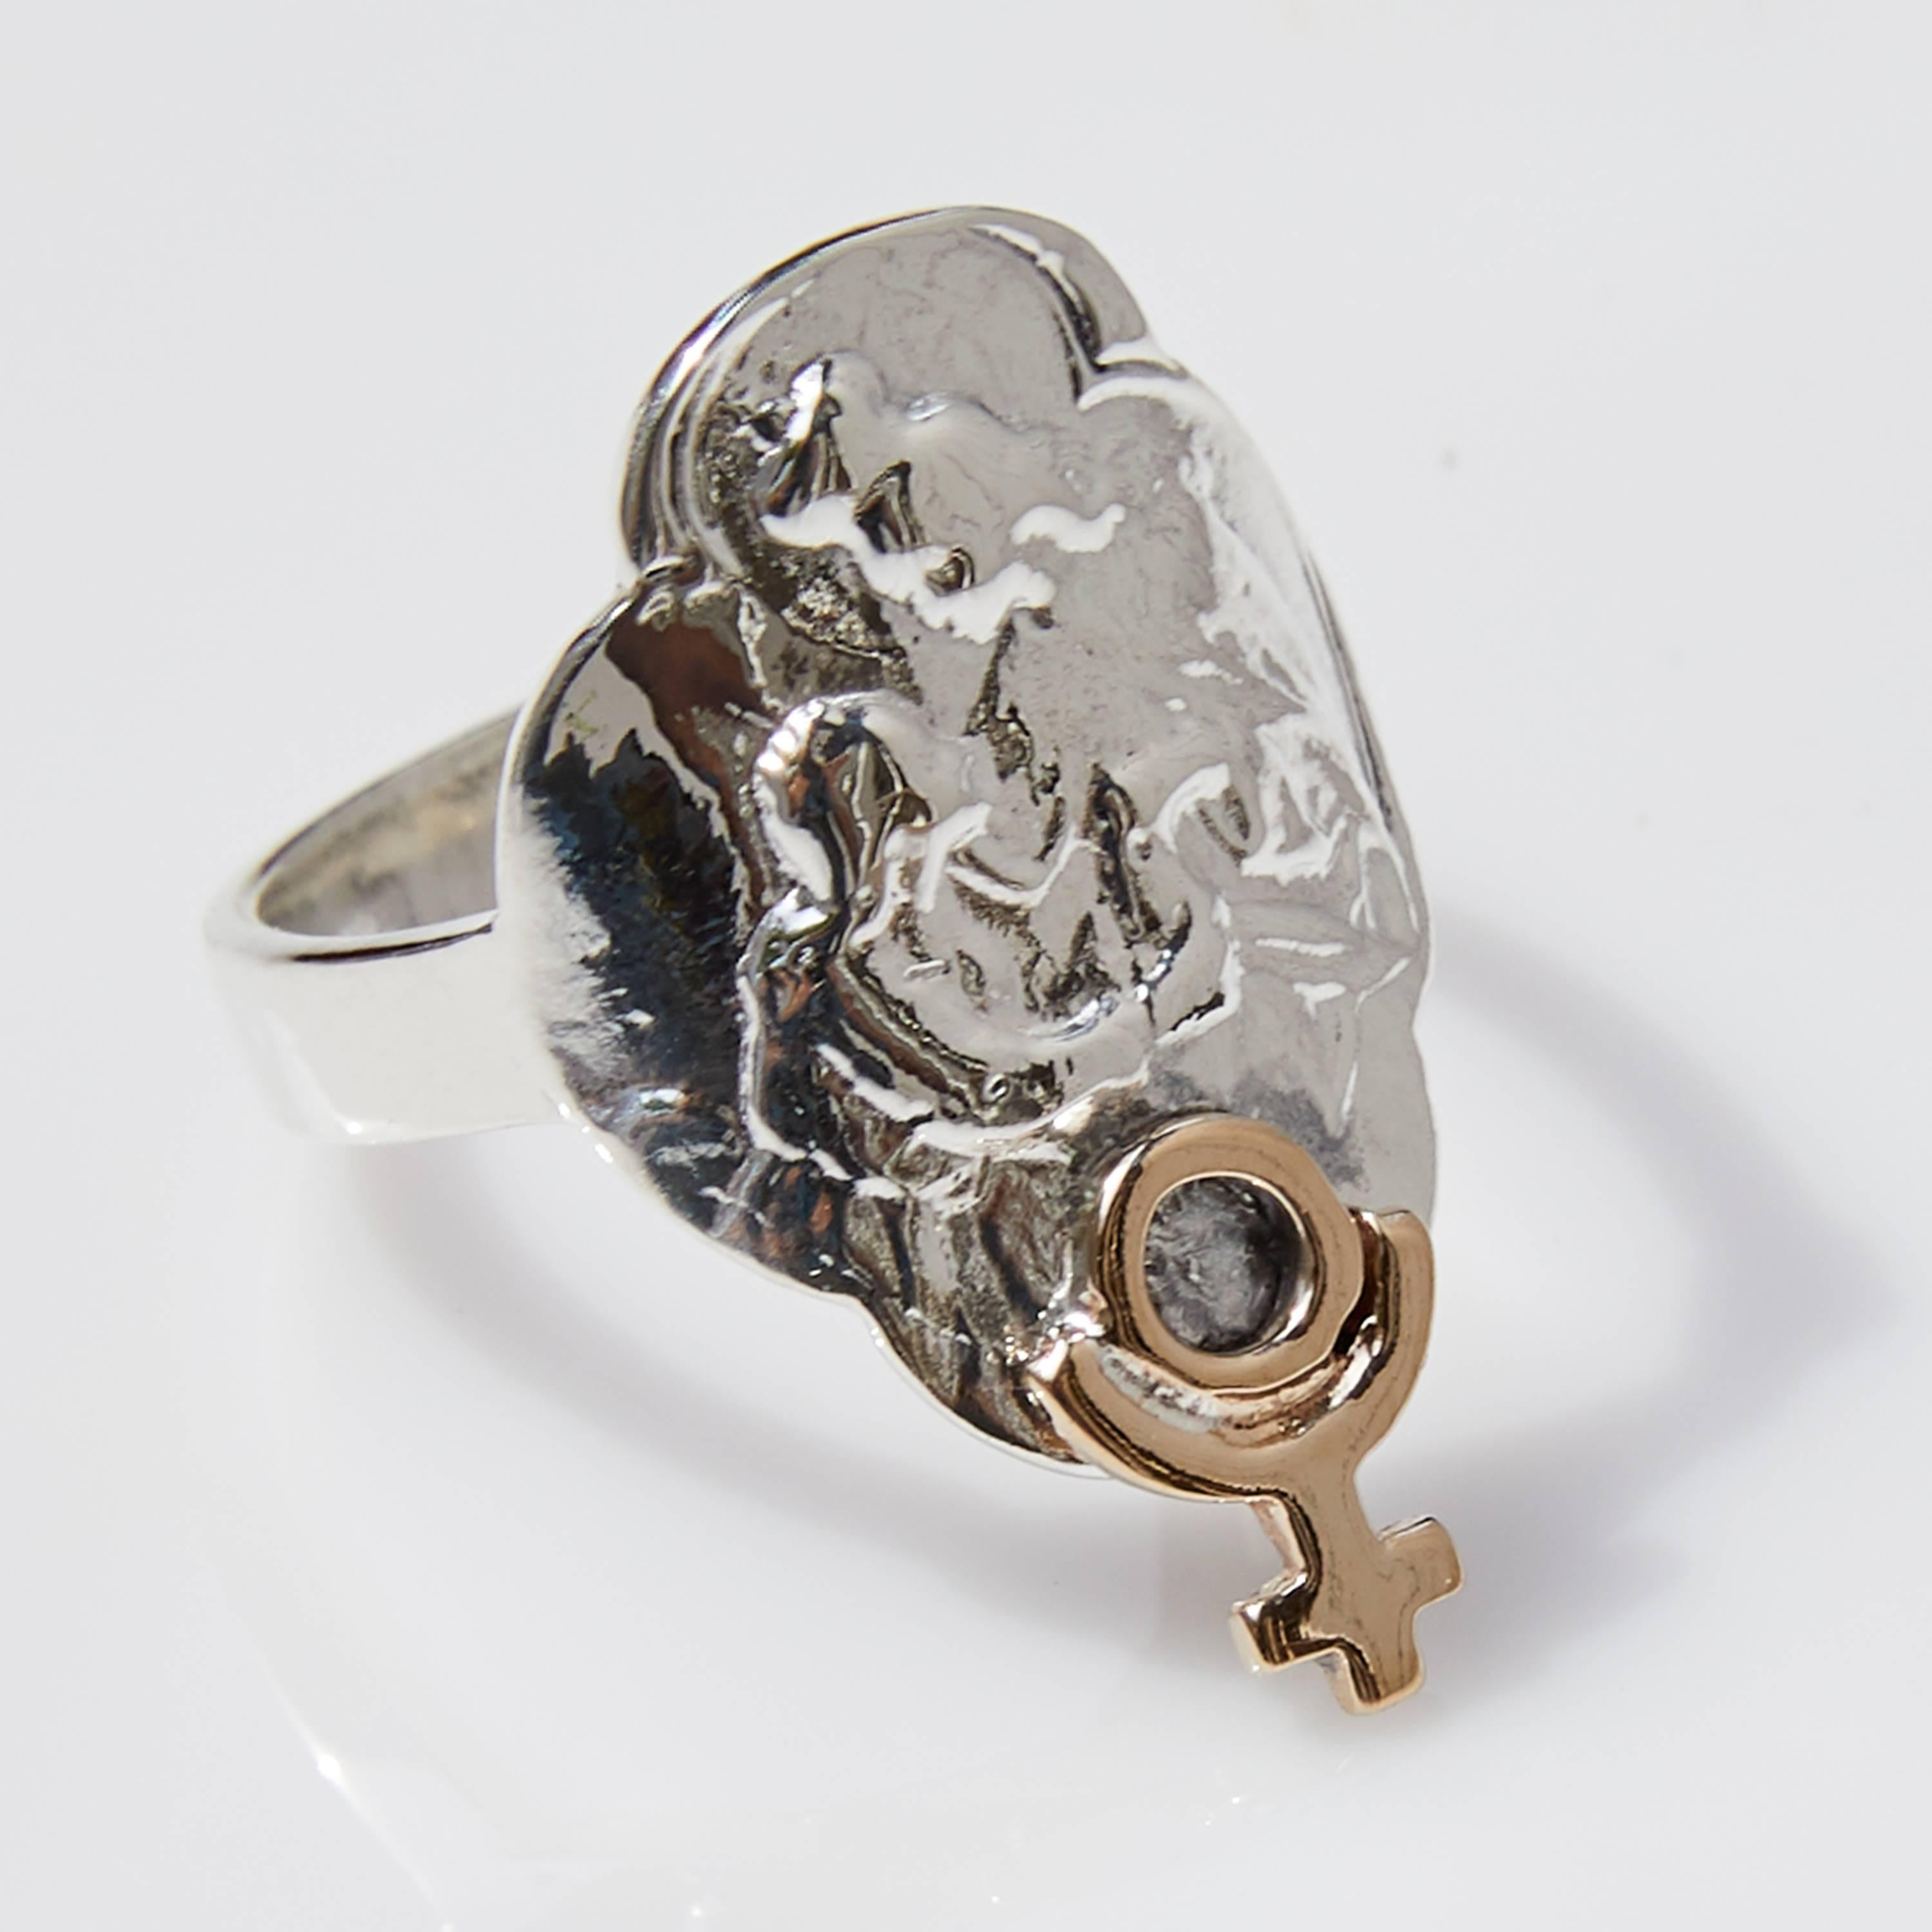 Jungfrau Maria Medaille Ring Sterling Silber Bronze Wappen Pluto Astrologie J Dauphin

J DAUPHIN 